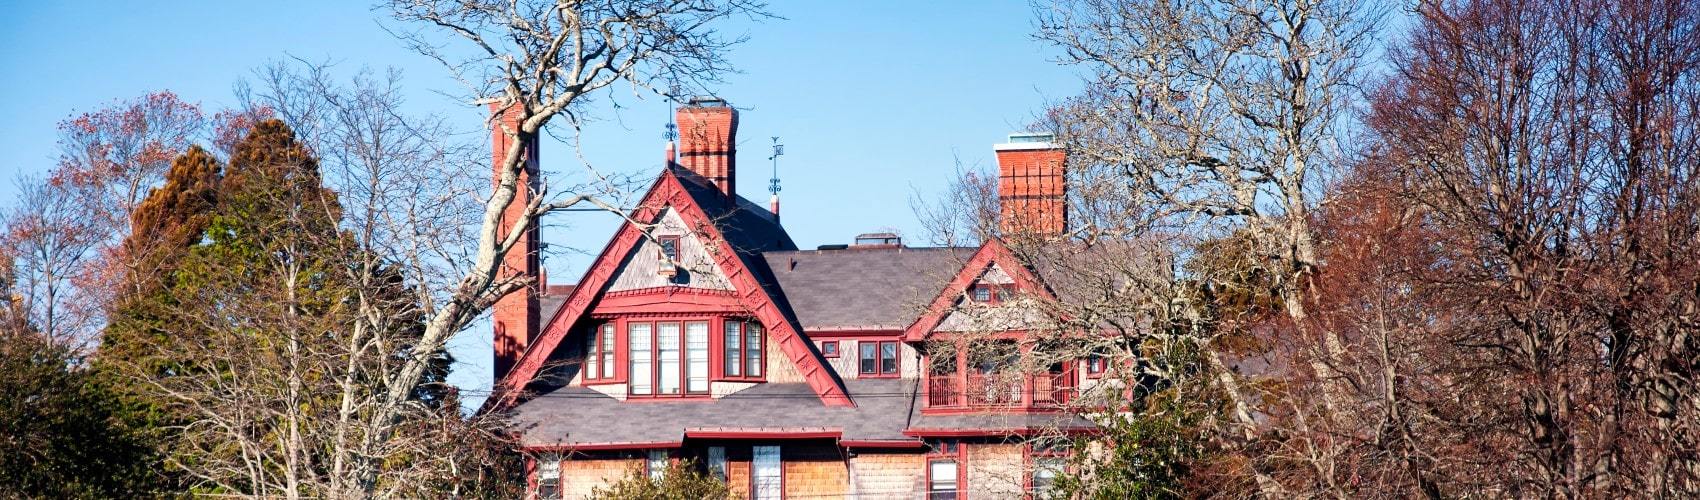 Victorian Style Home in Newport, Rhode Island